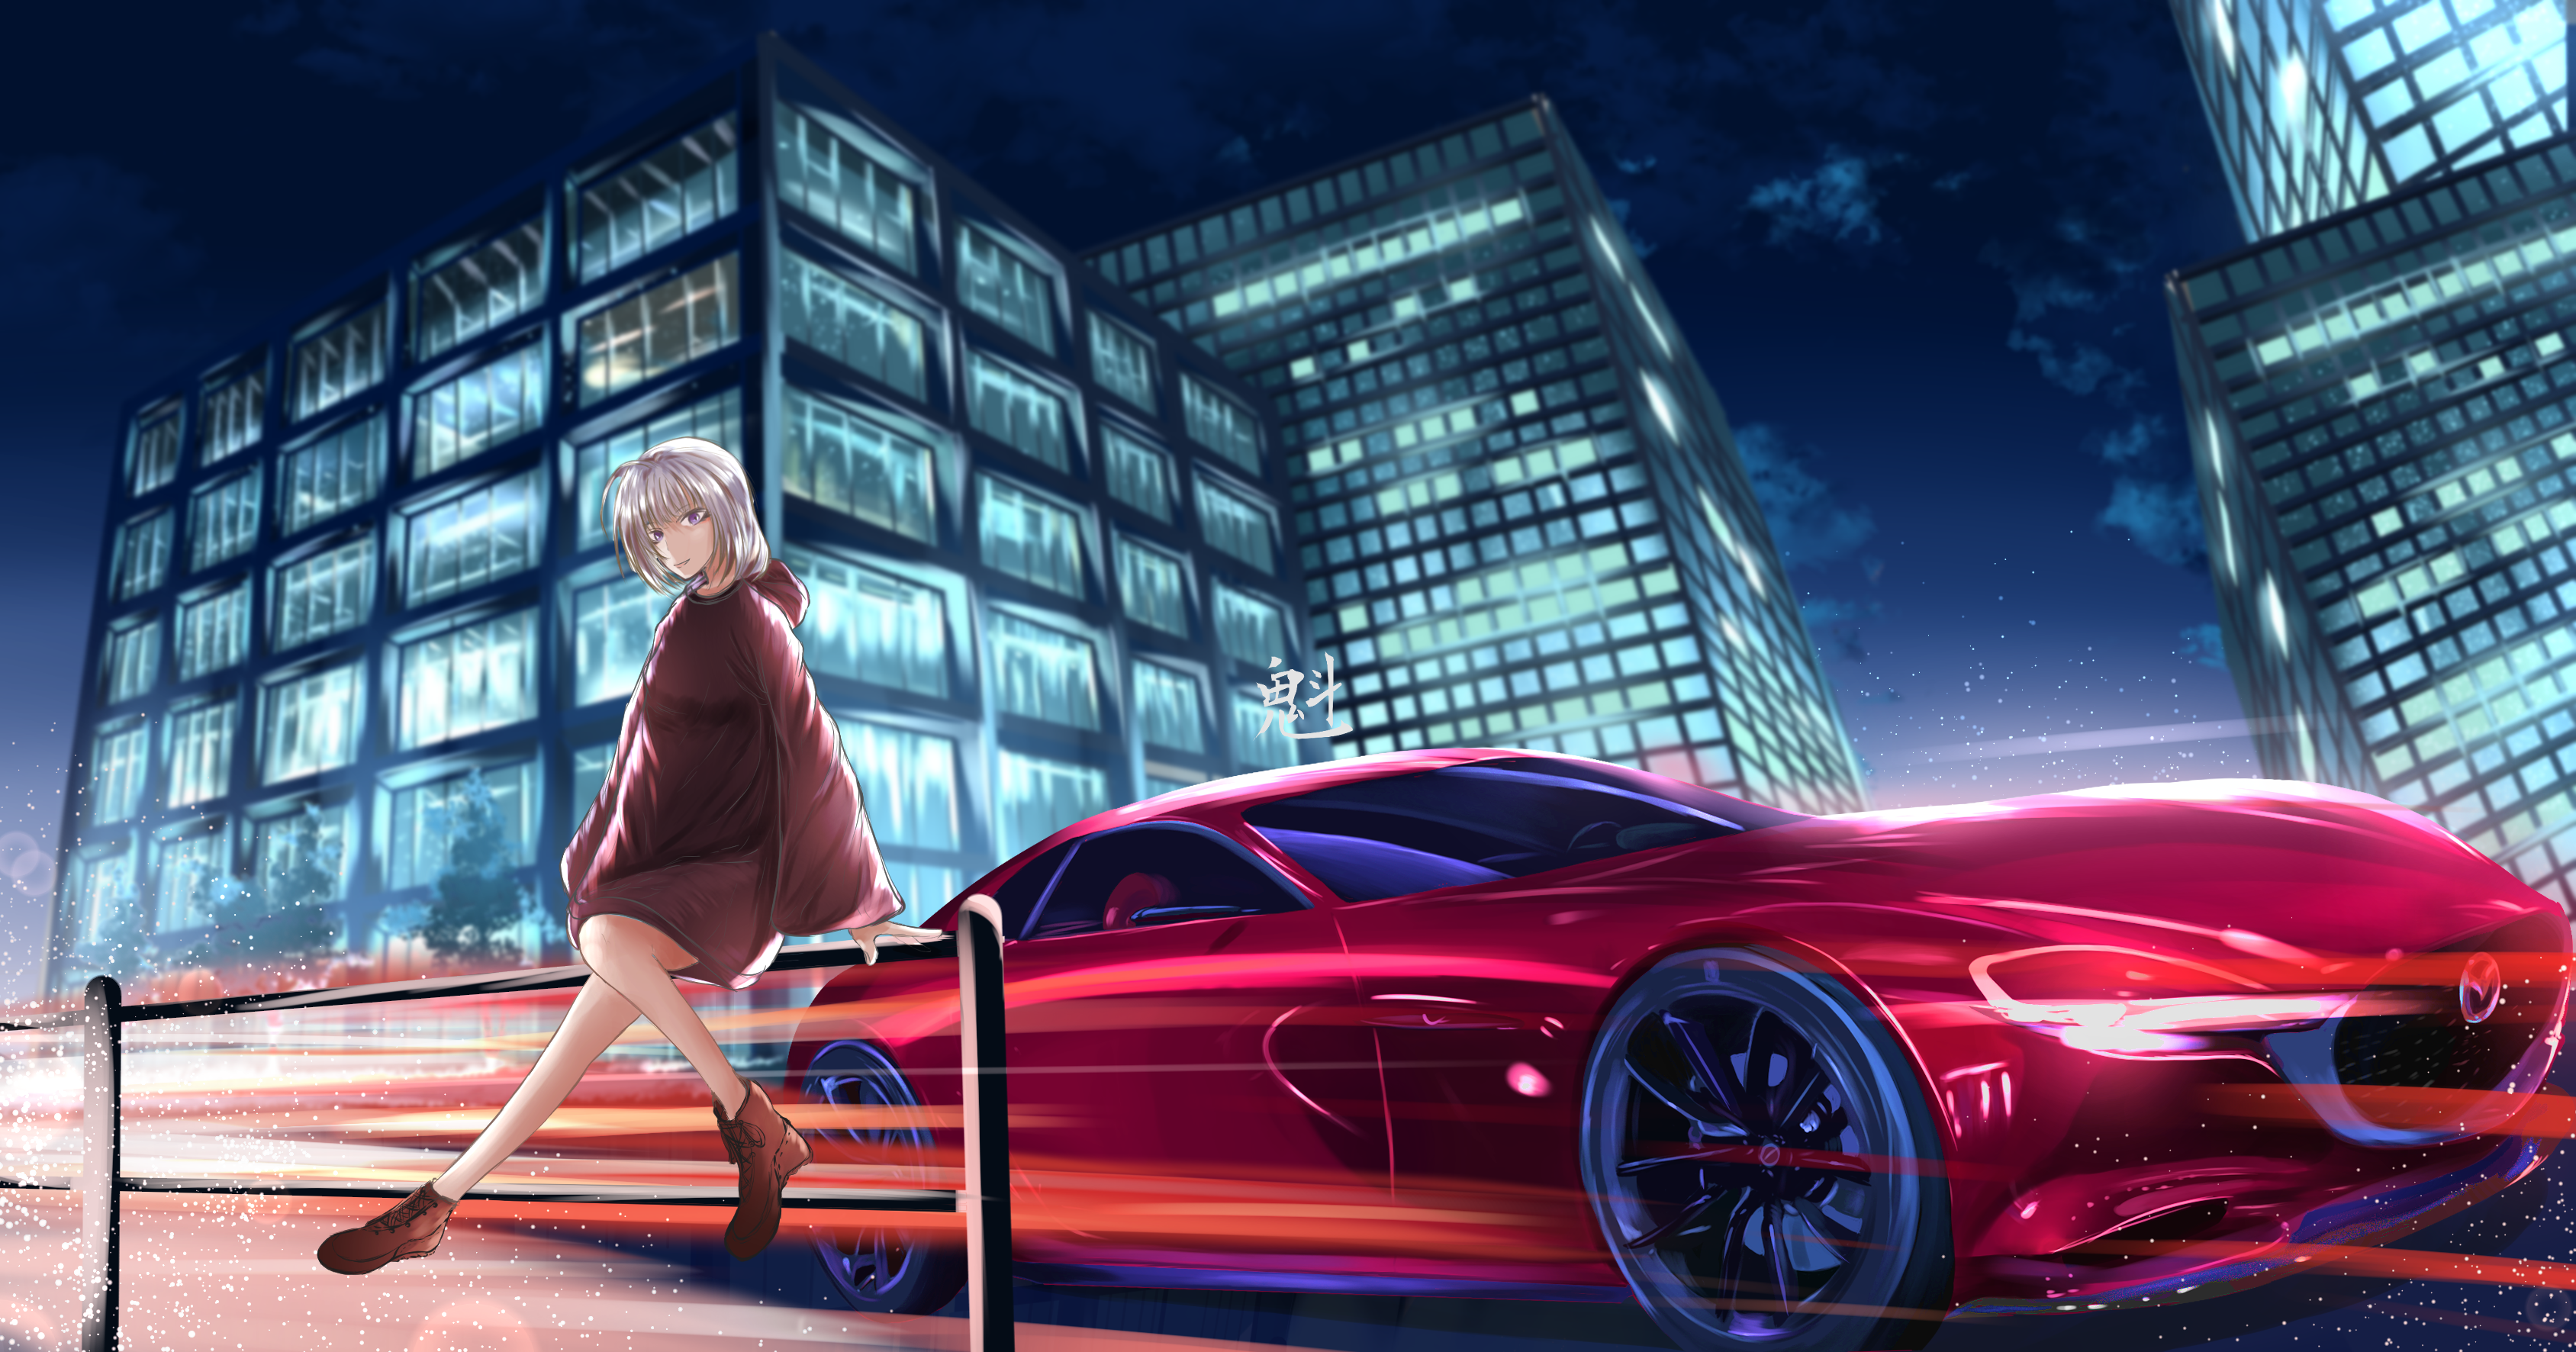 enthusiast cars in anime backgrounds on Twitter Nissan 180SX Nana S1E02  httpstcor8WM2BshtB  Twitter